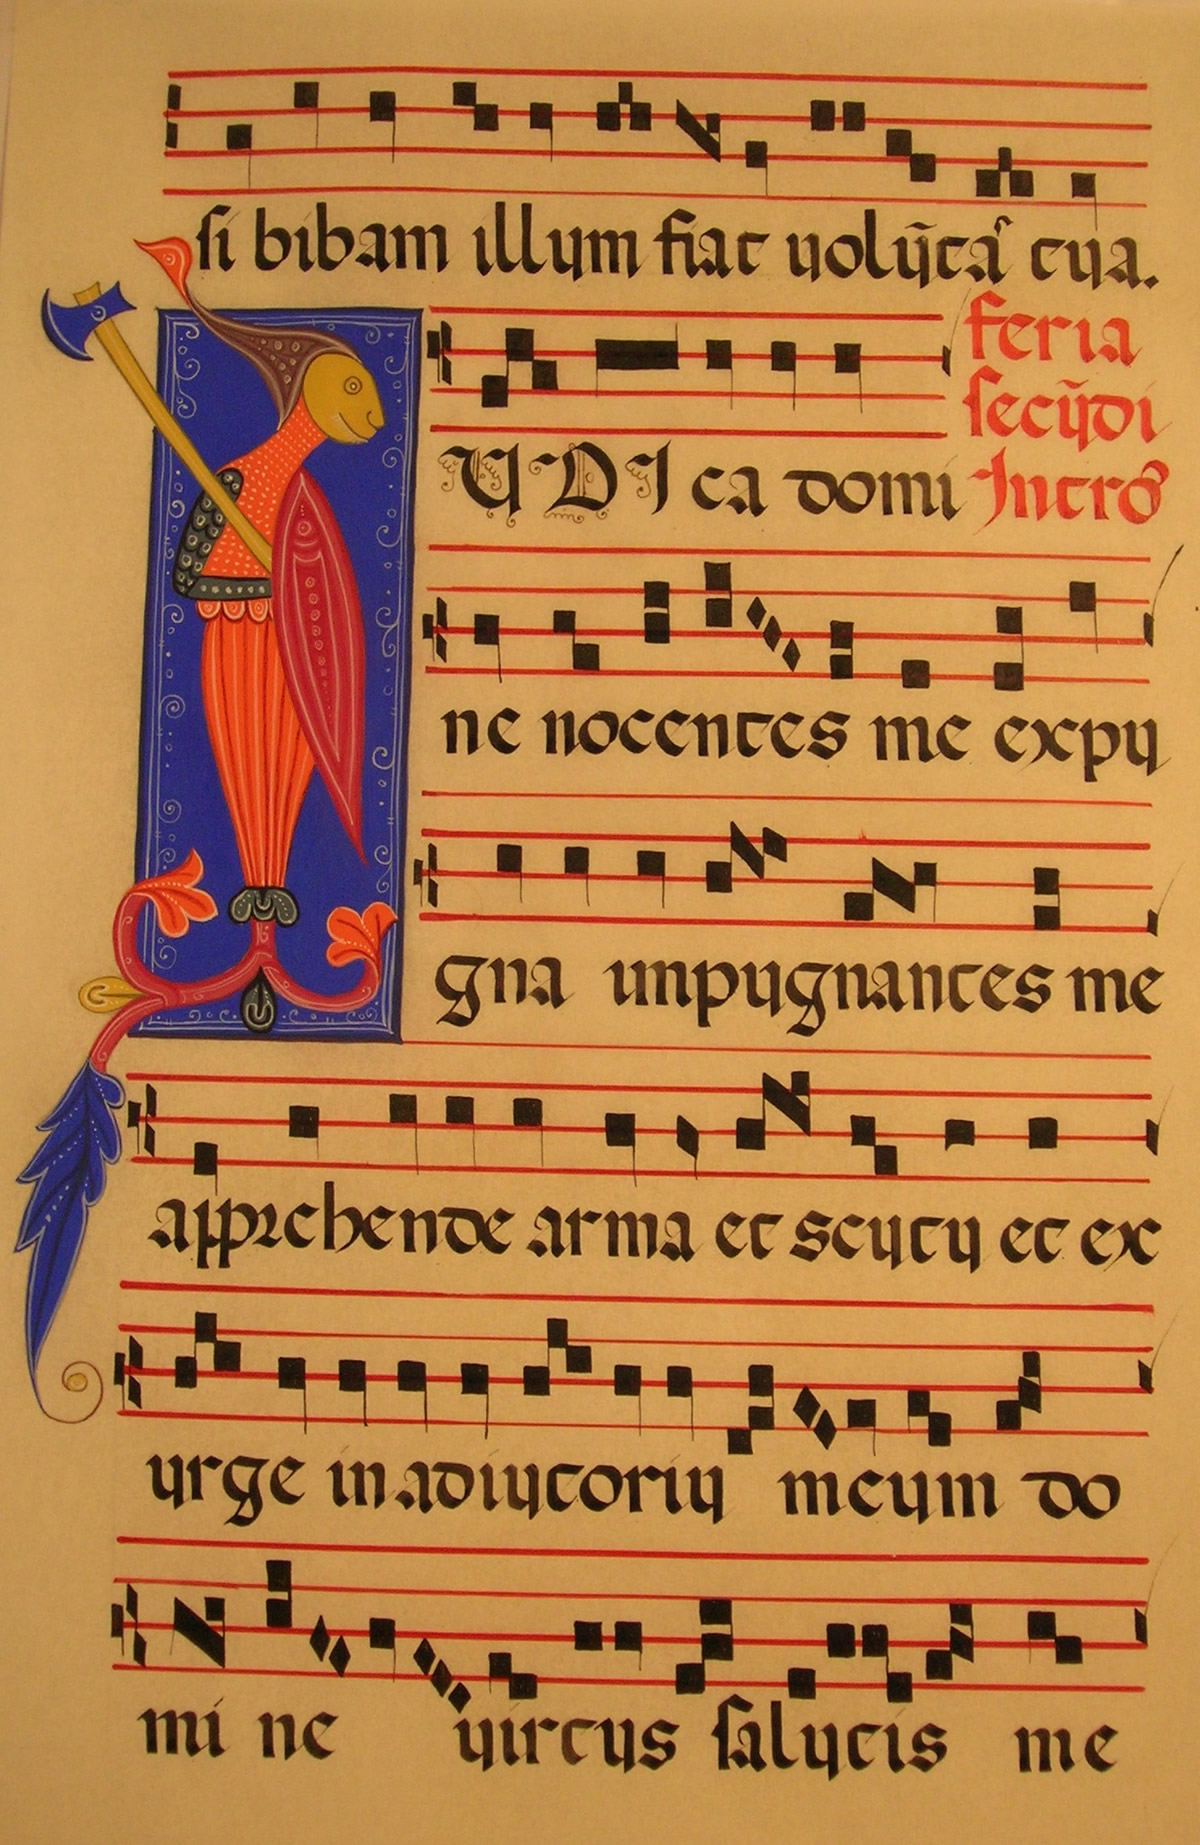 Anthem Book XIII Century, cm. 35 x 50 on parchment paper.